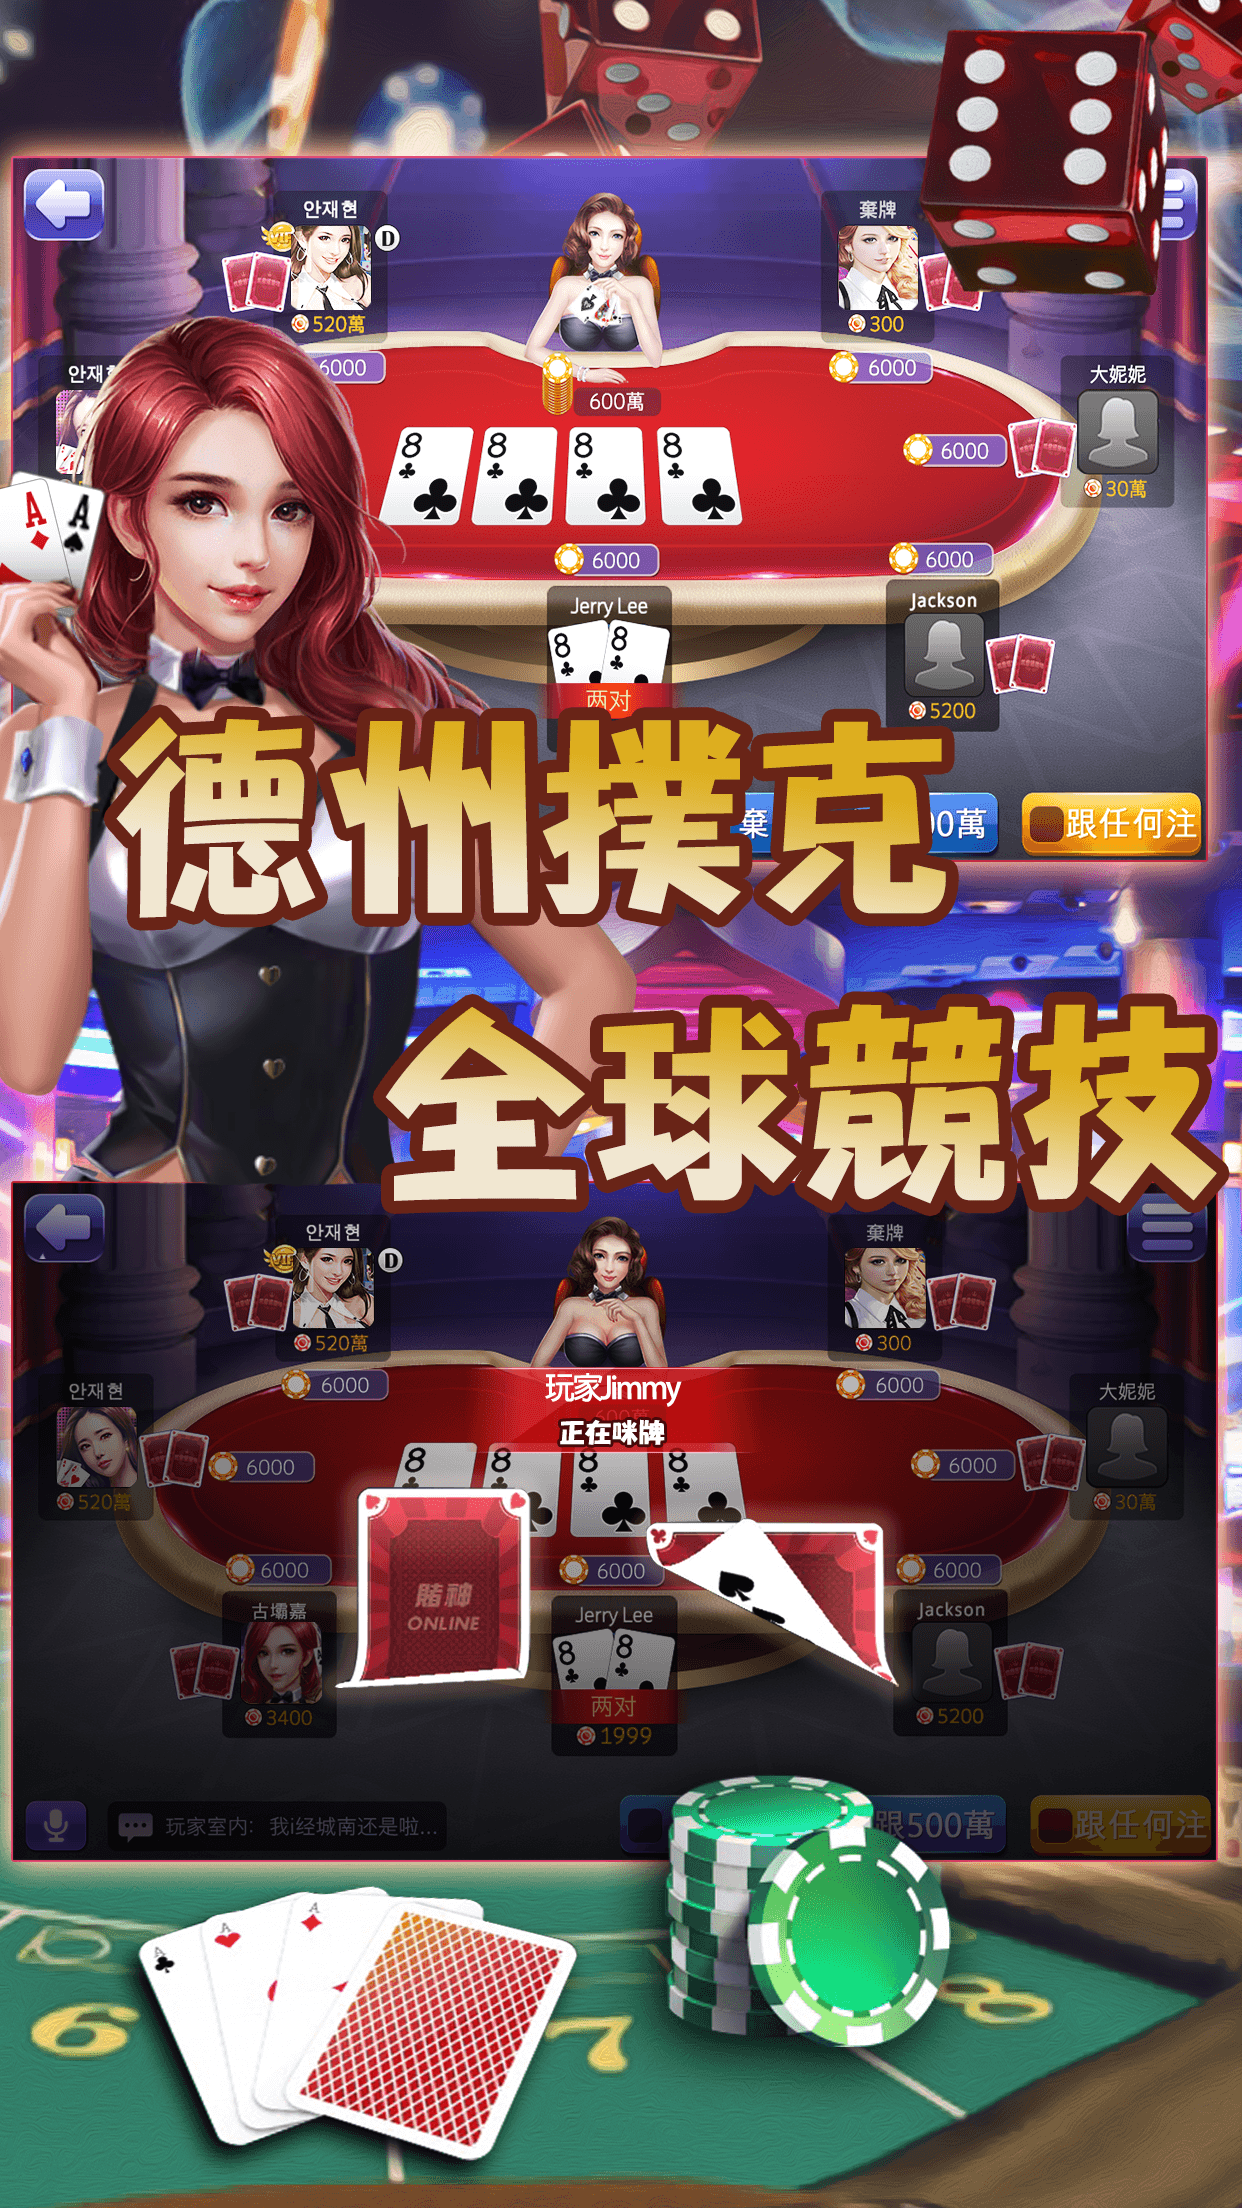 Free online poker slot machines